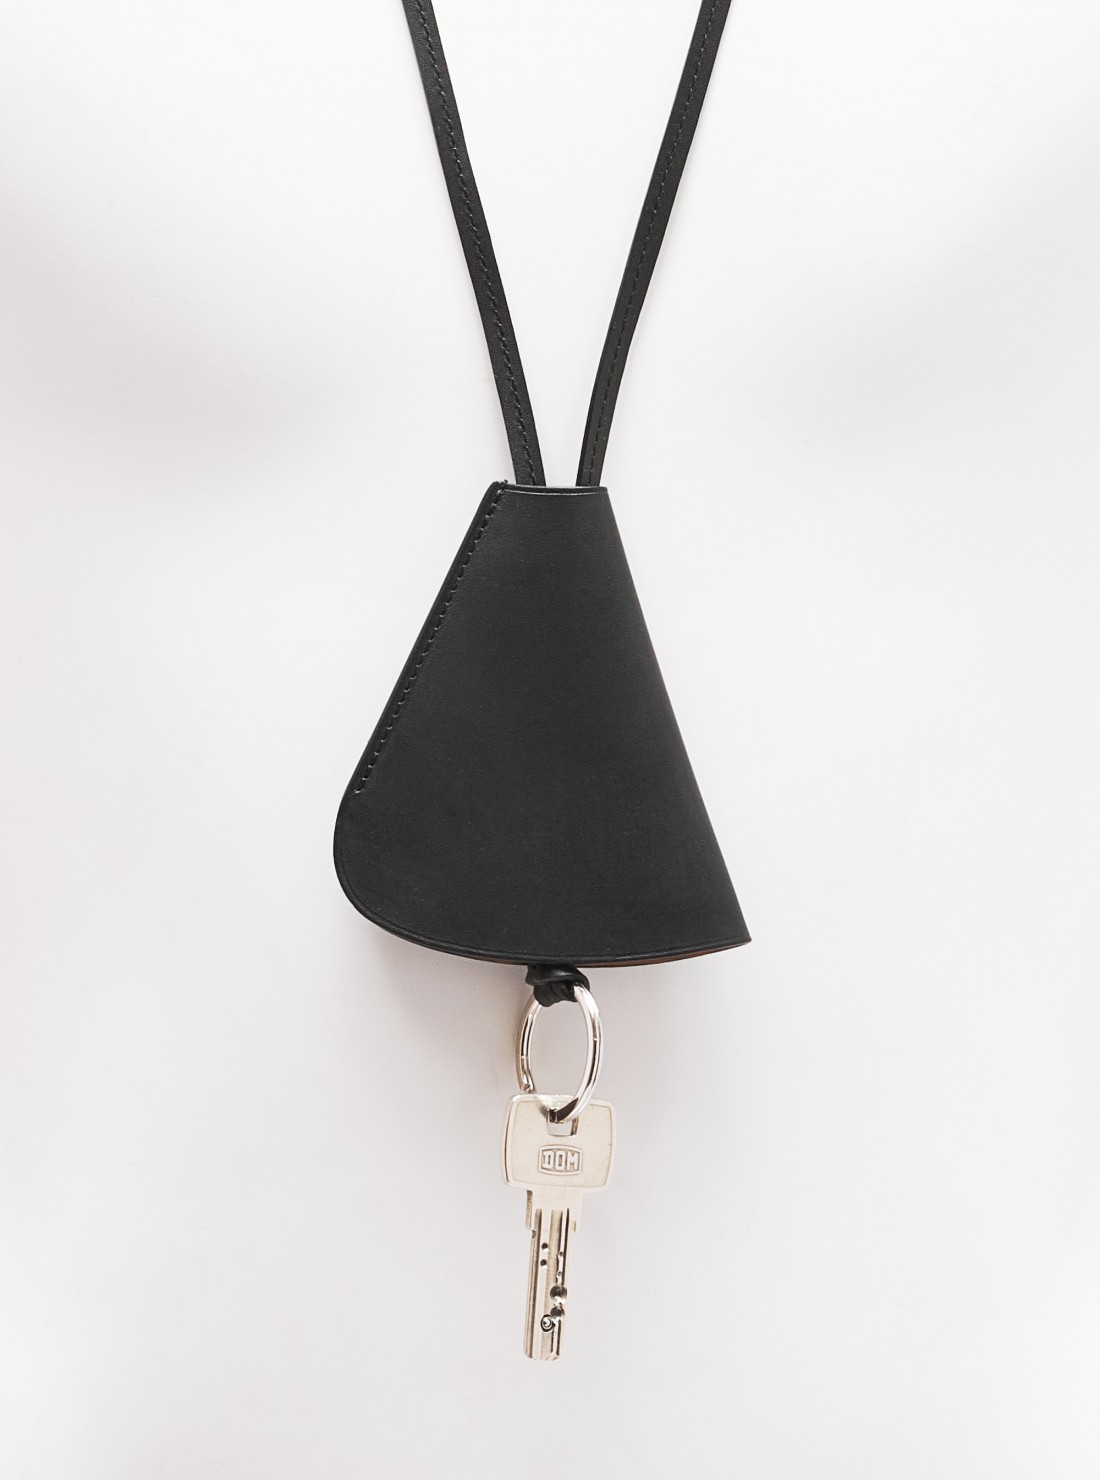 Necklace bell for keys